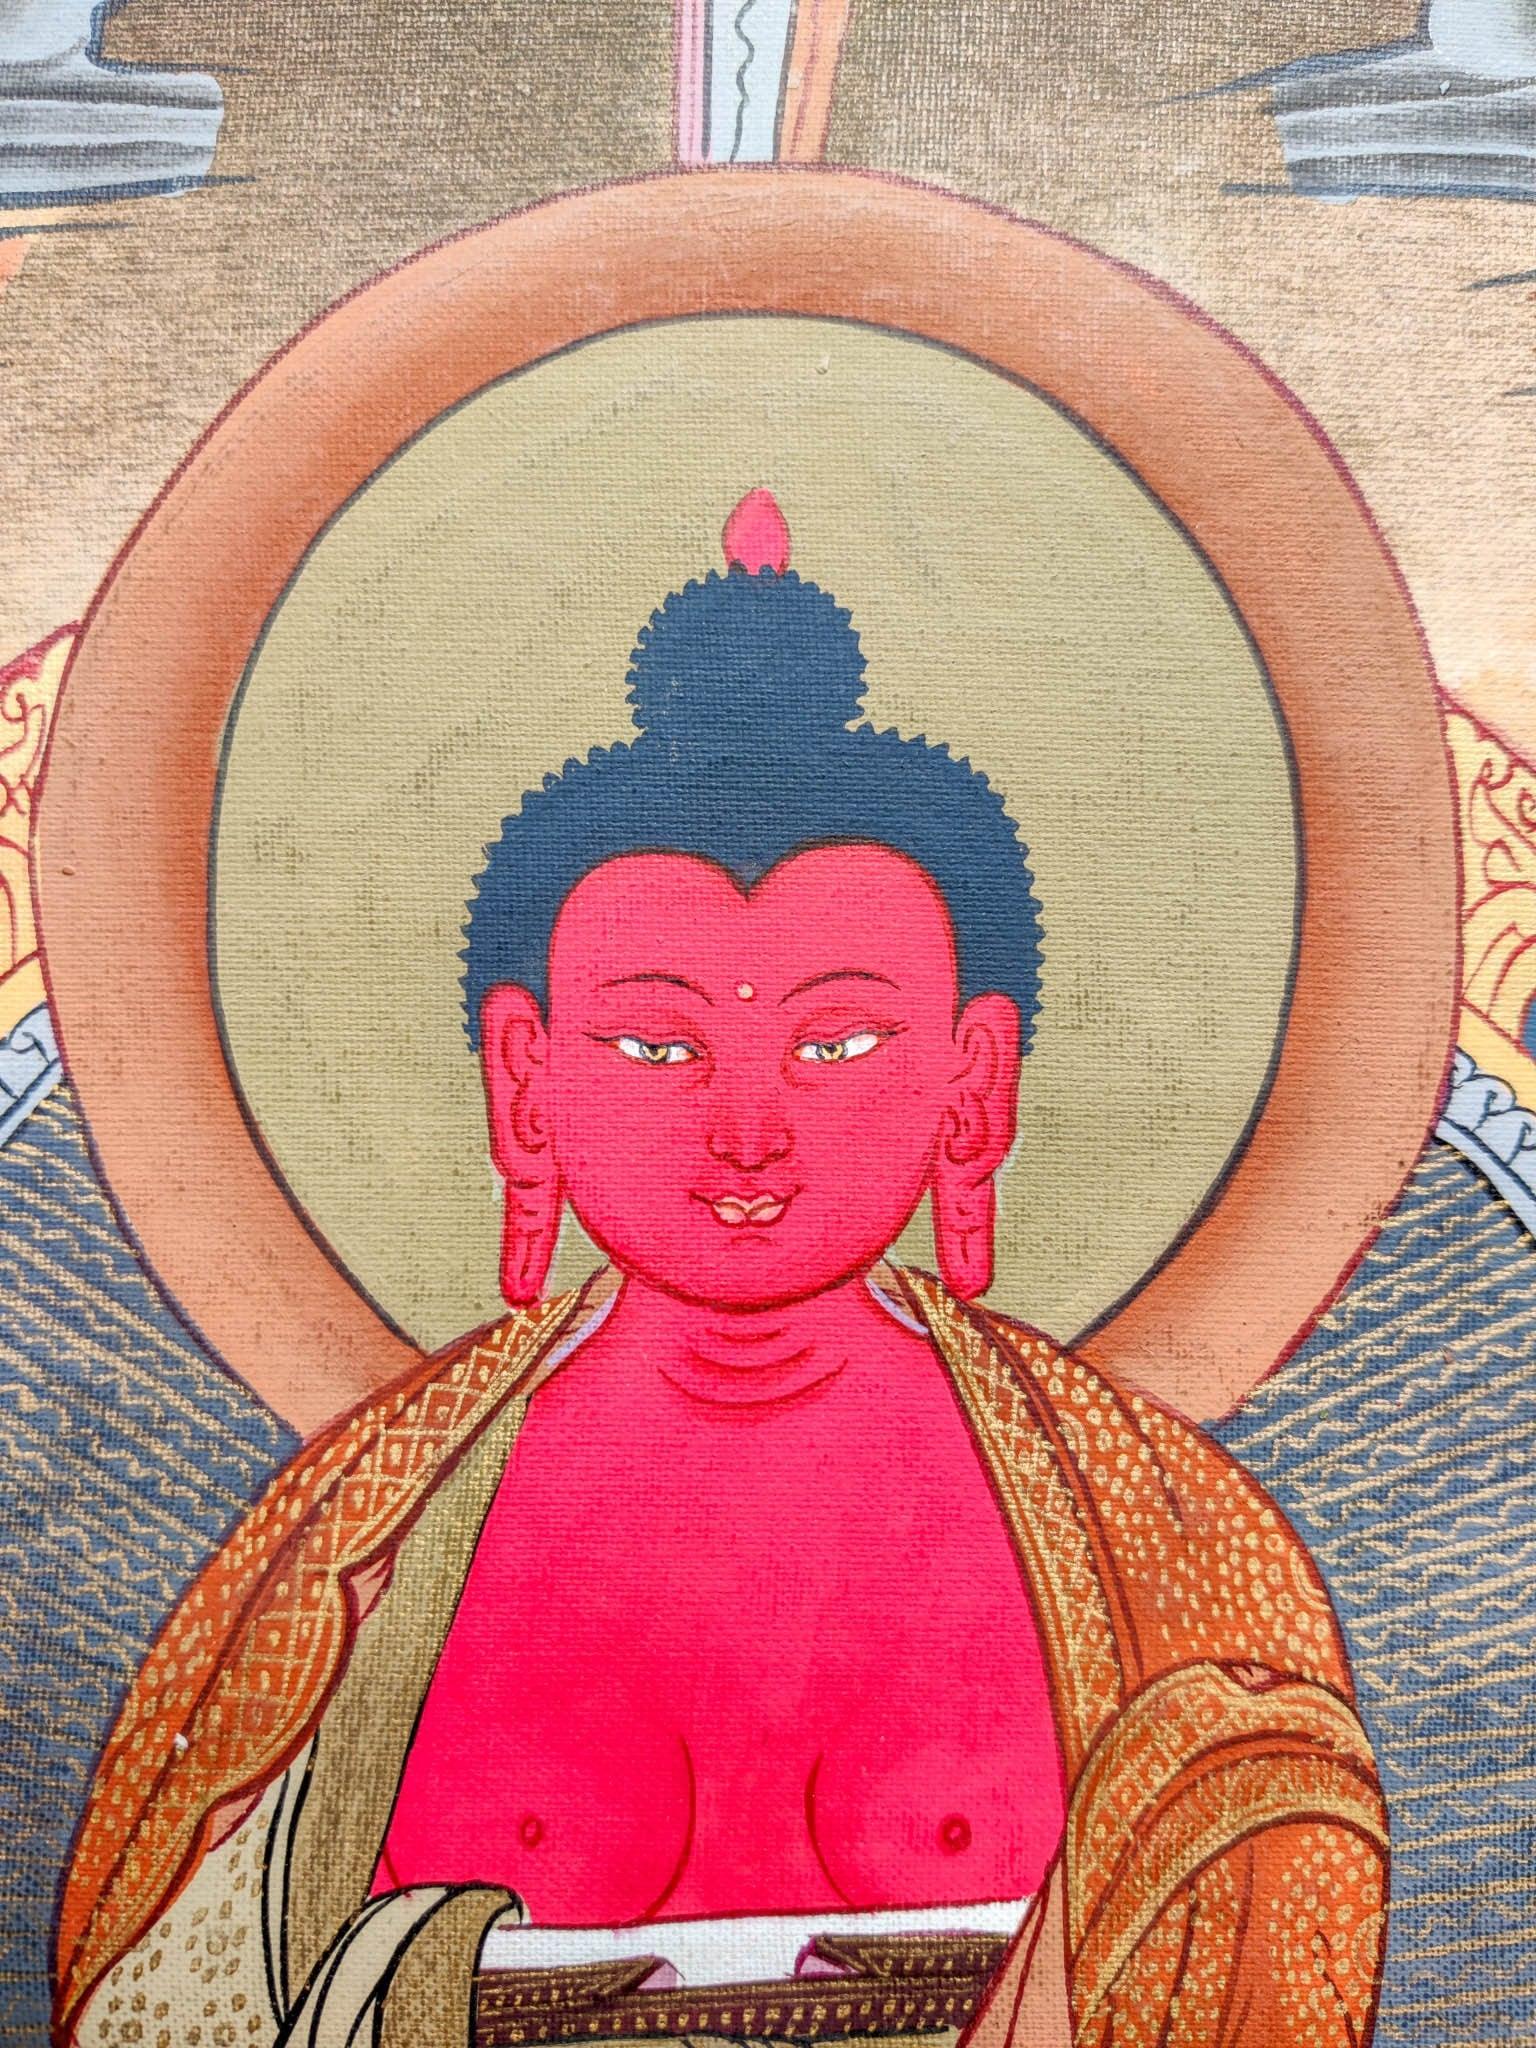 Amitabha Buddha Thangka Art close up